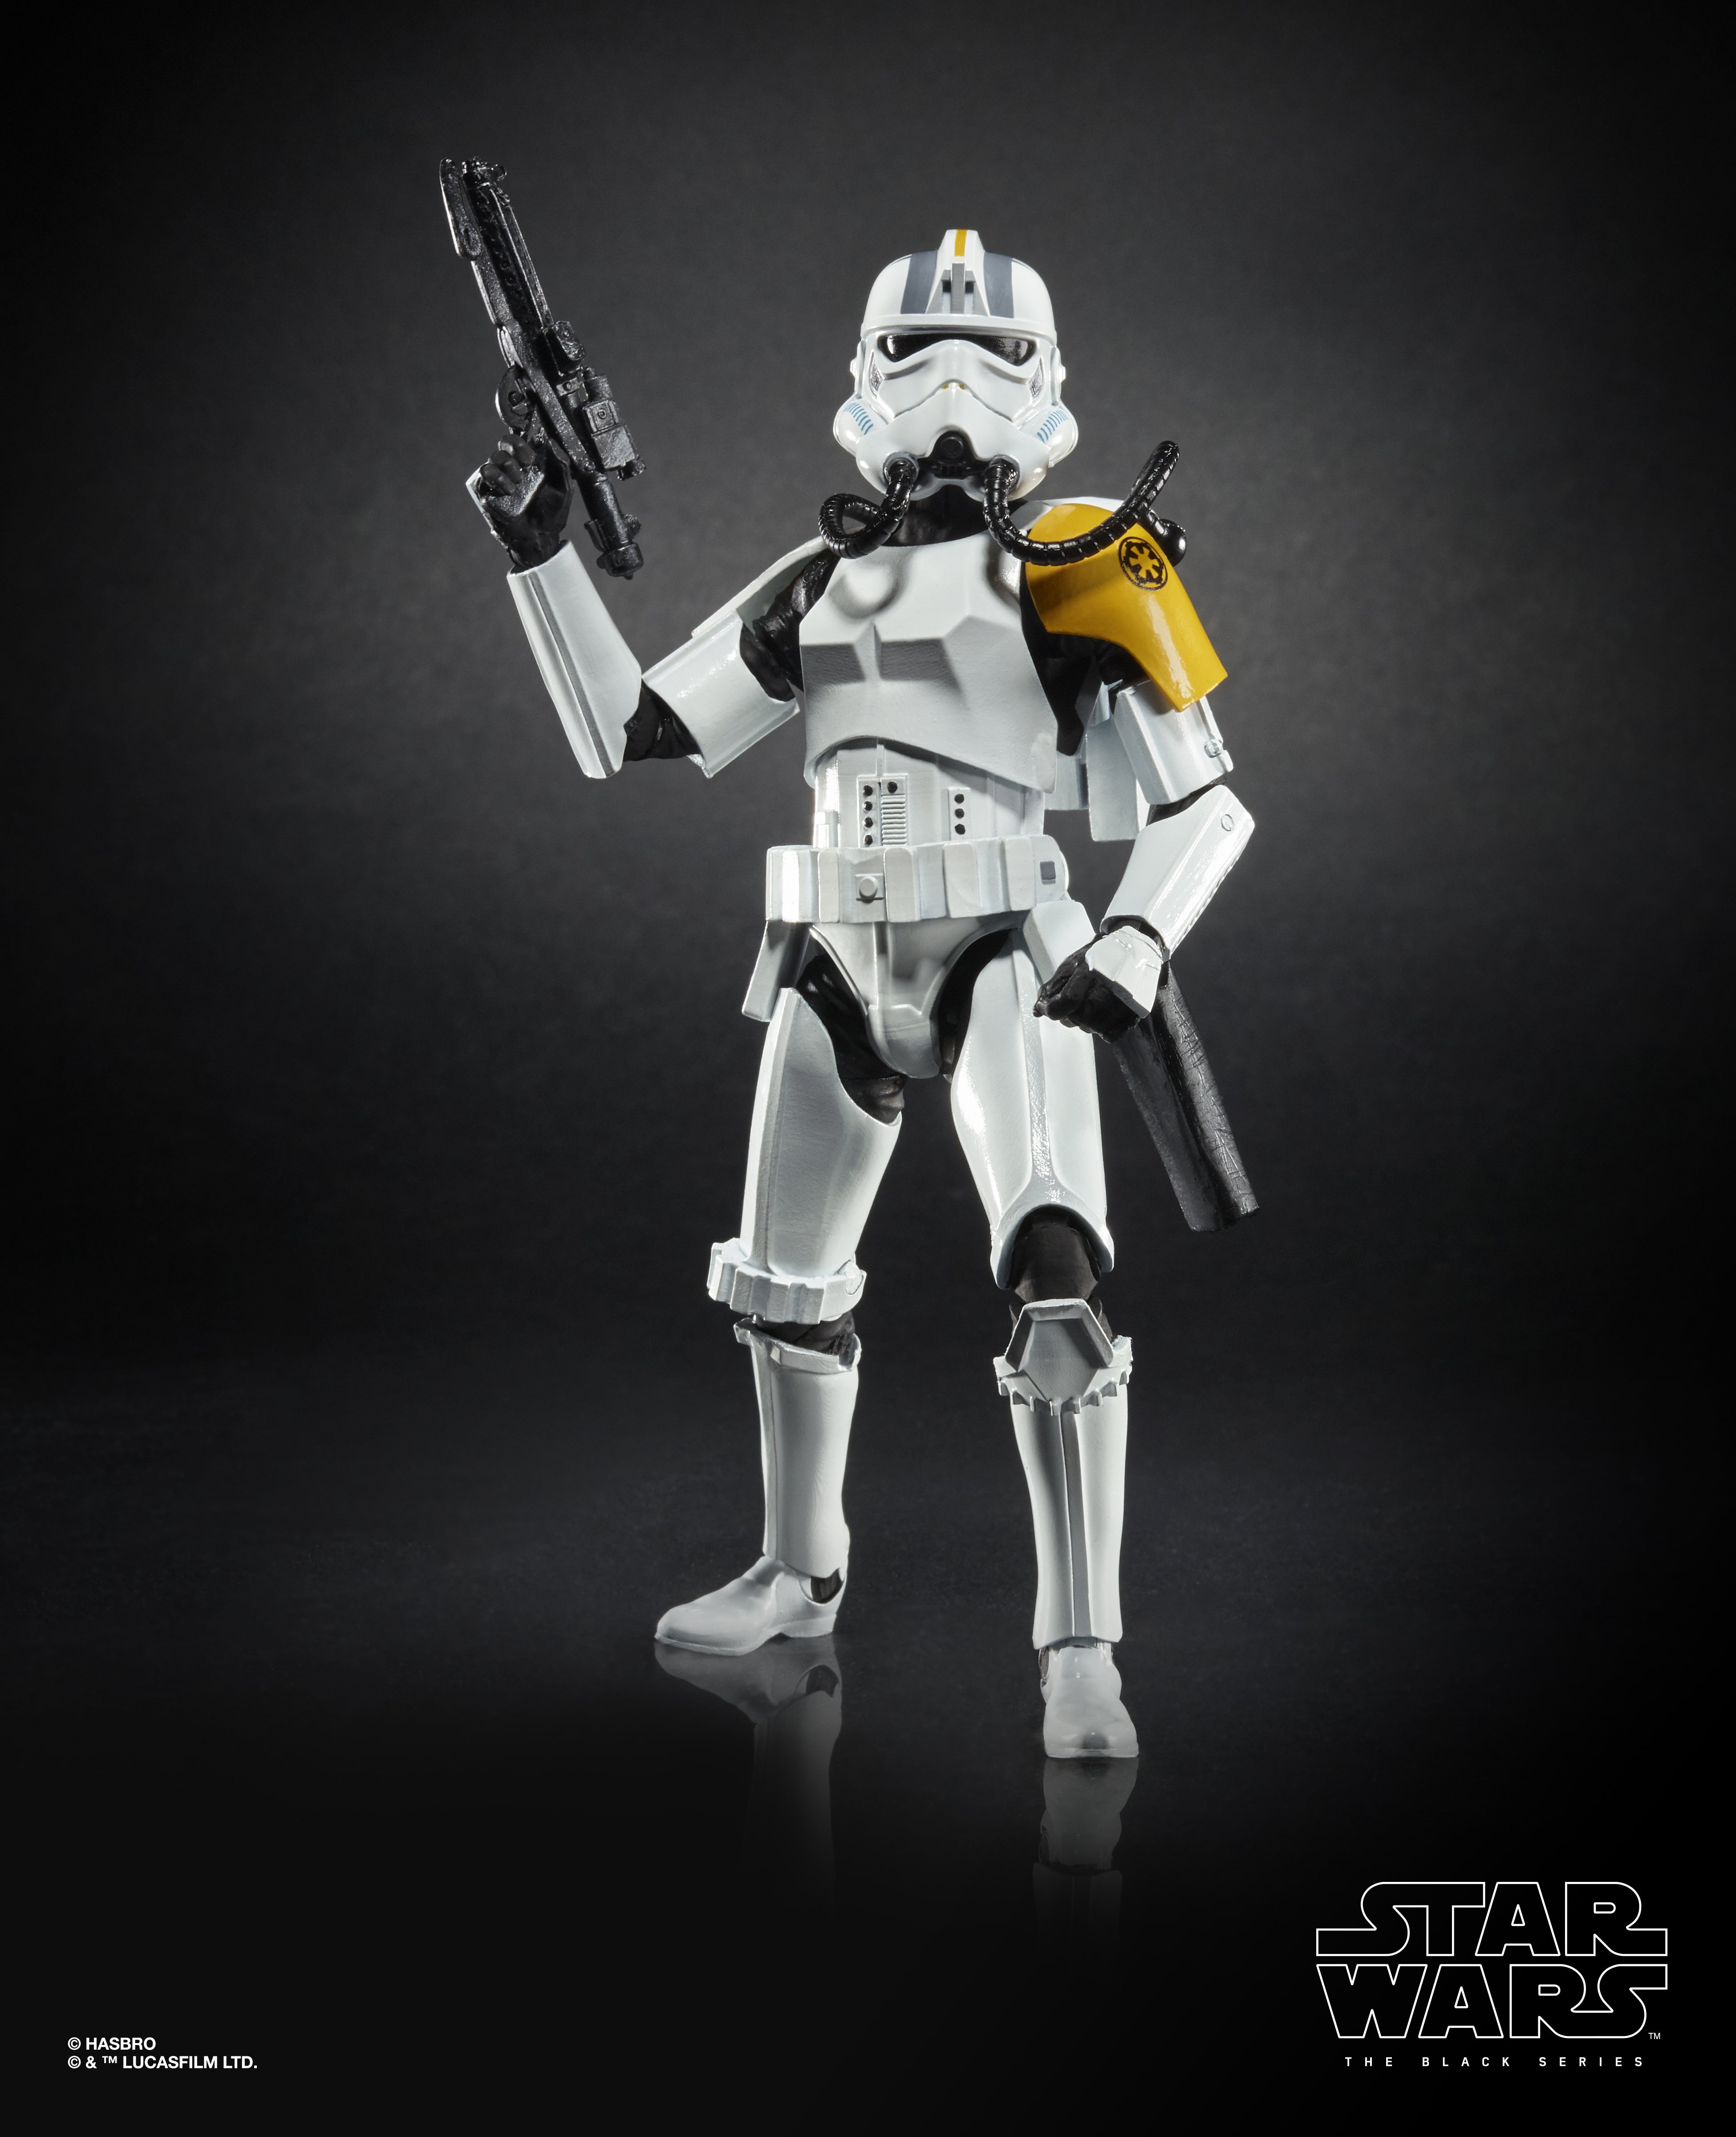 Star Wars The Black Series 6-inch Rocket Trooper Figure 1 Gamestop Exclusive